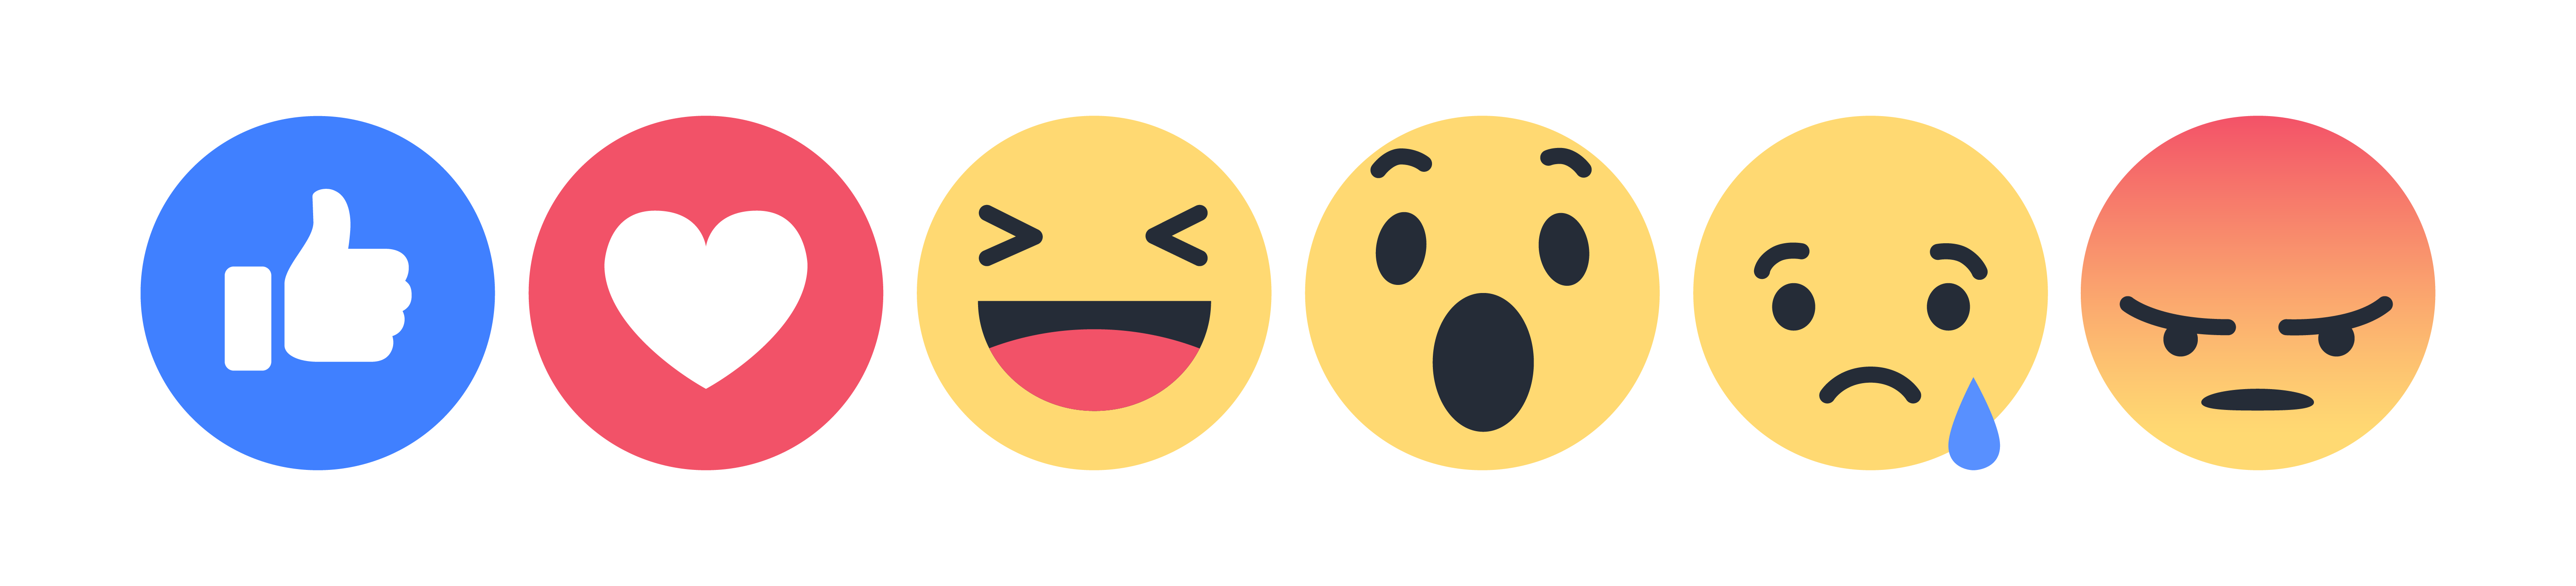 Facebook Reaction Emojis Png - facebookcx